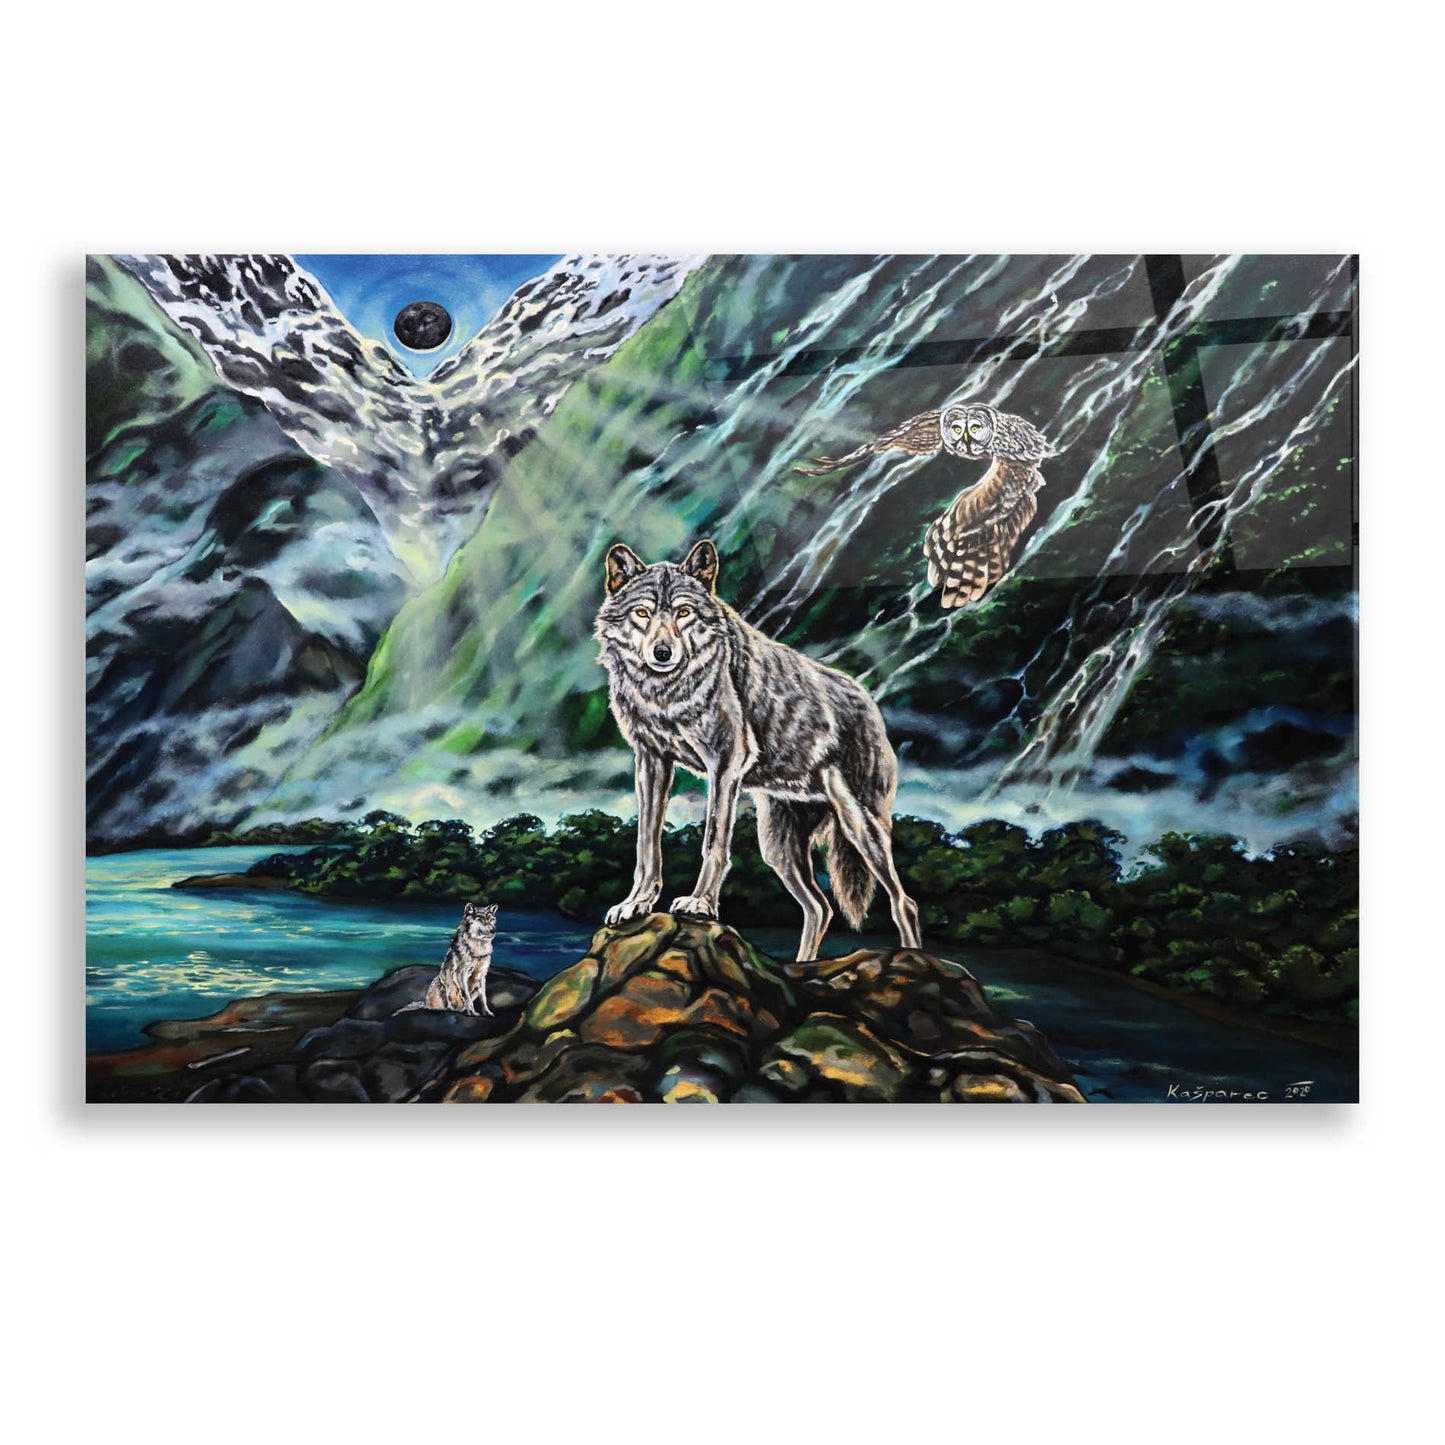 Epic Art 'Wolfpack The New Moon' by Jan Kasparec, Acrylic Glass Wall Art,24x16